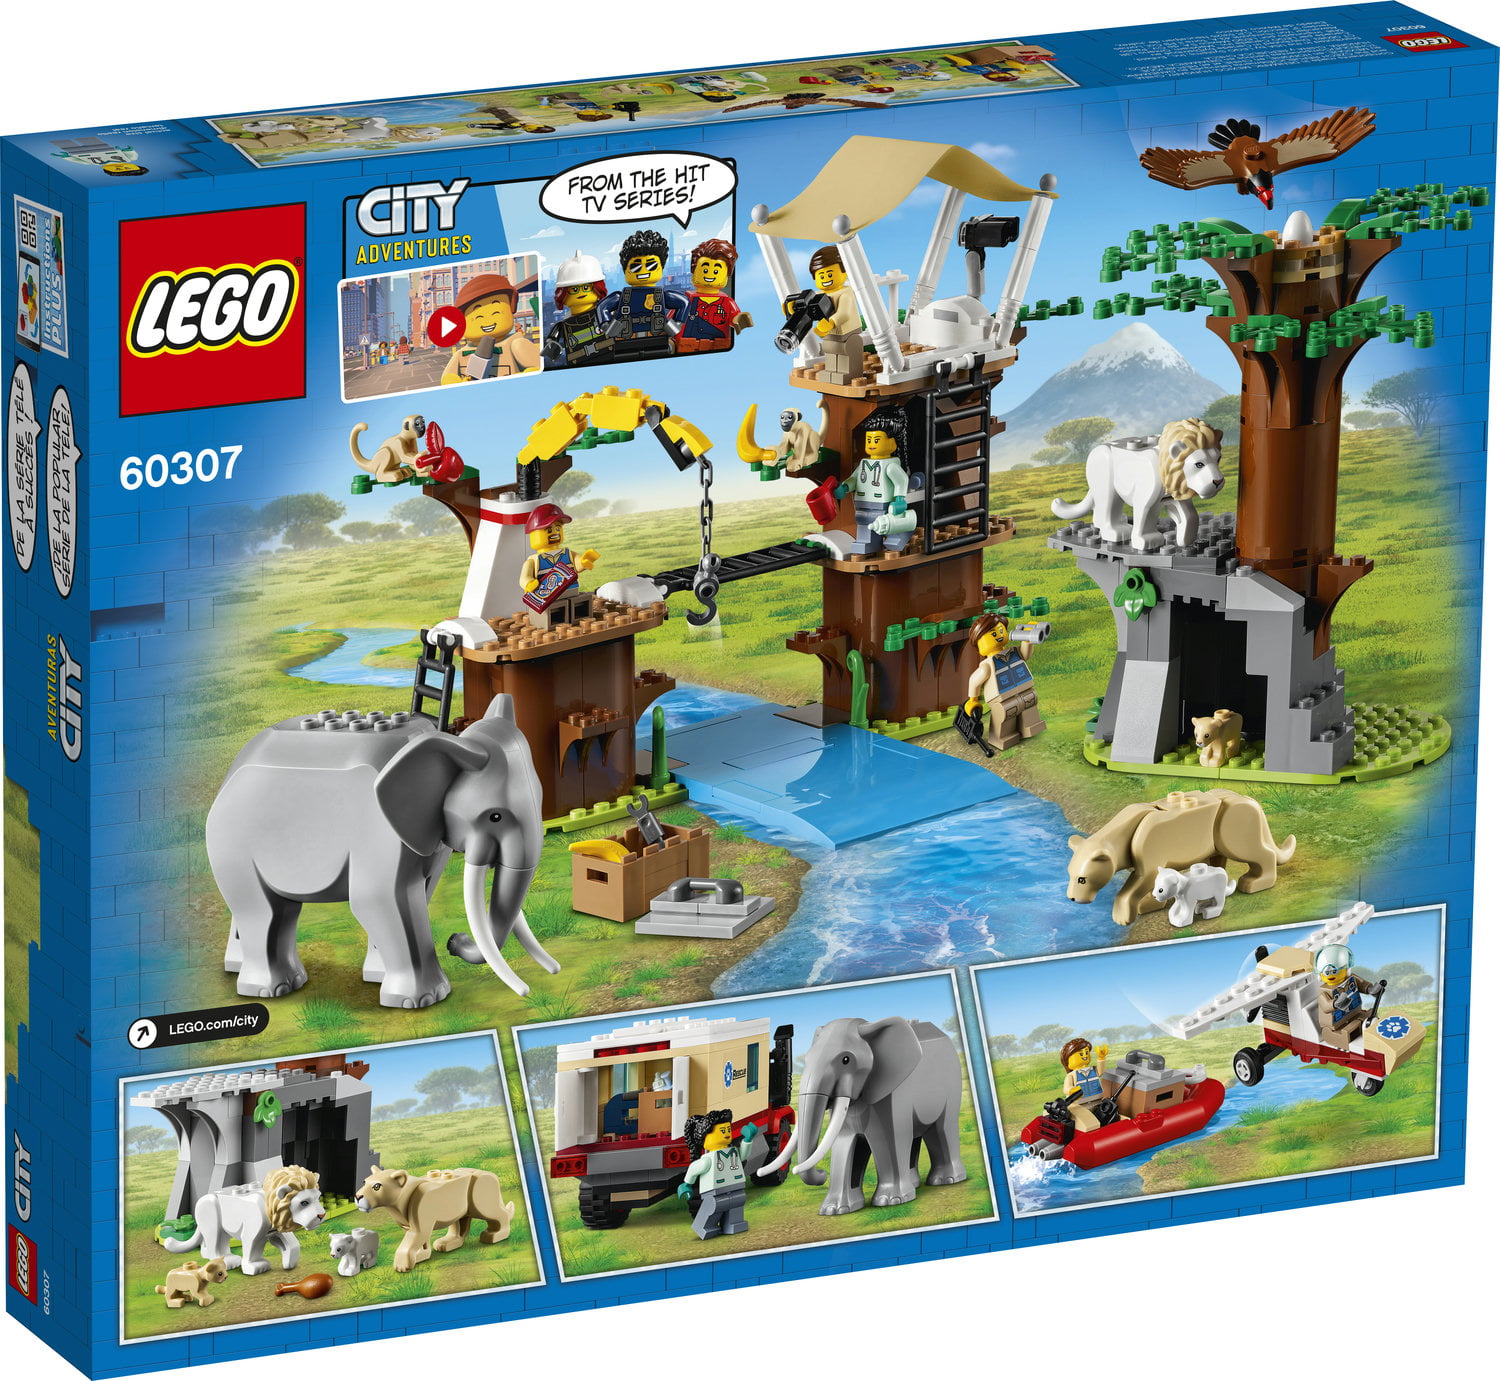 60307 Wildlife Rescue Camp, Lego City Adventures Wiki